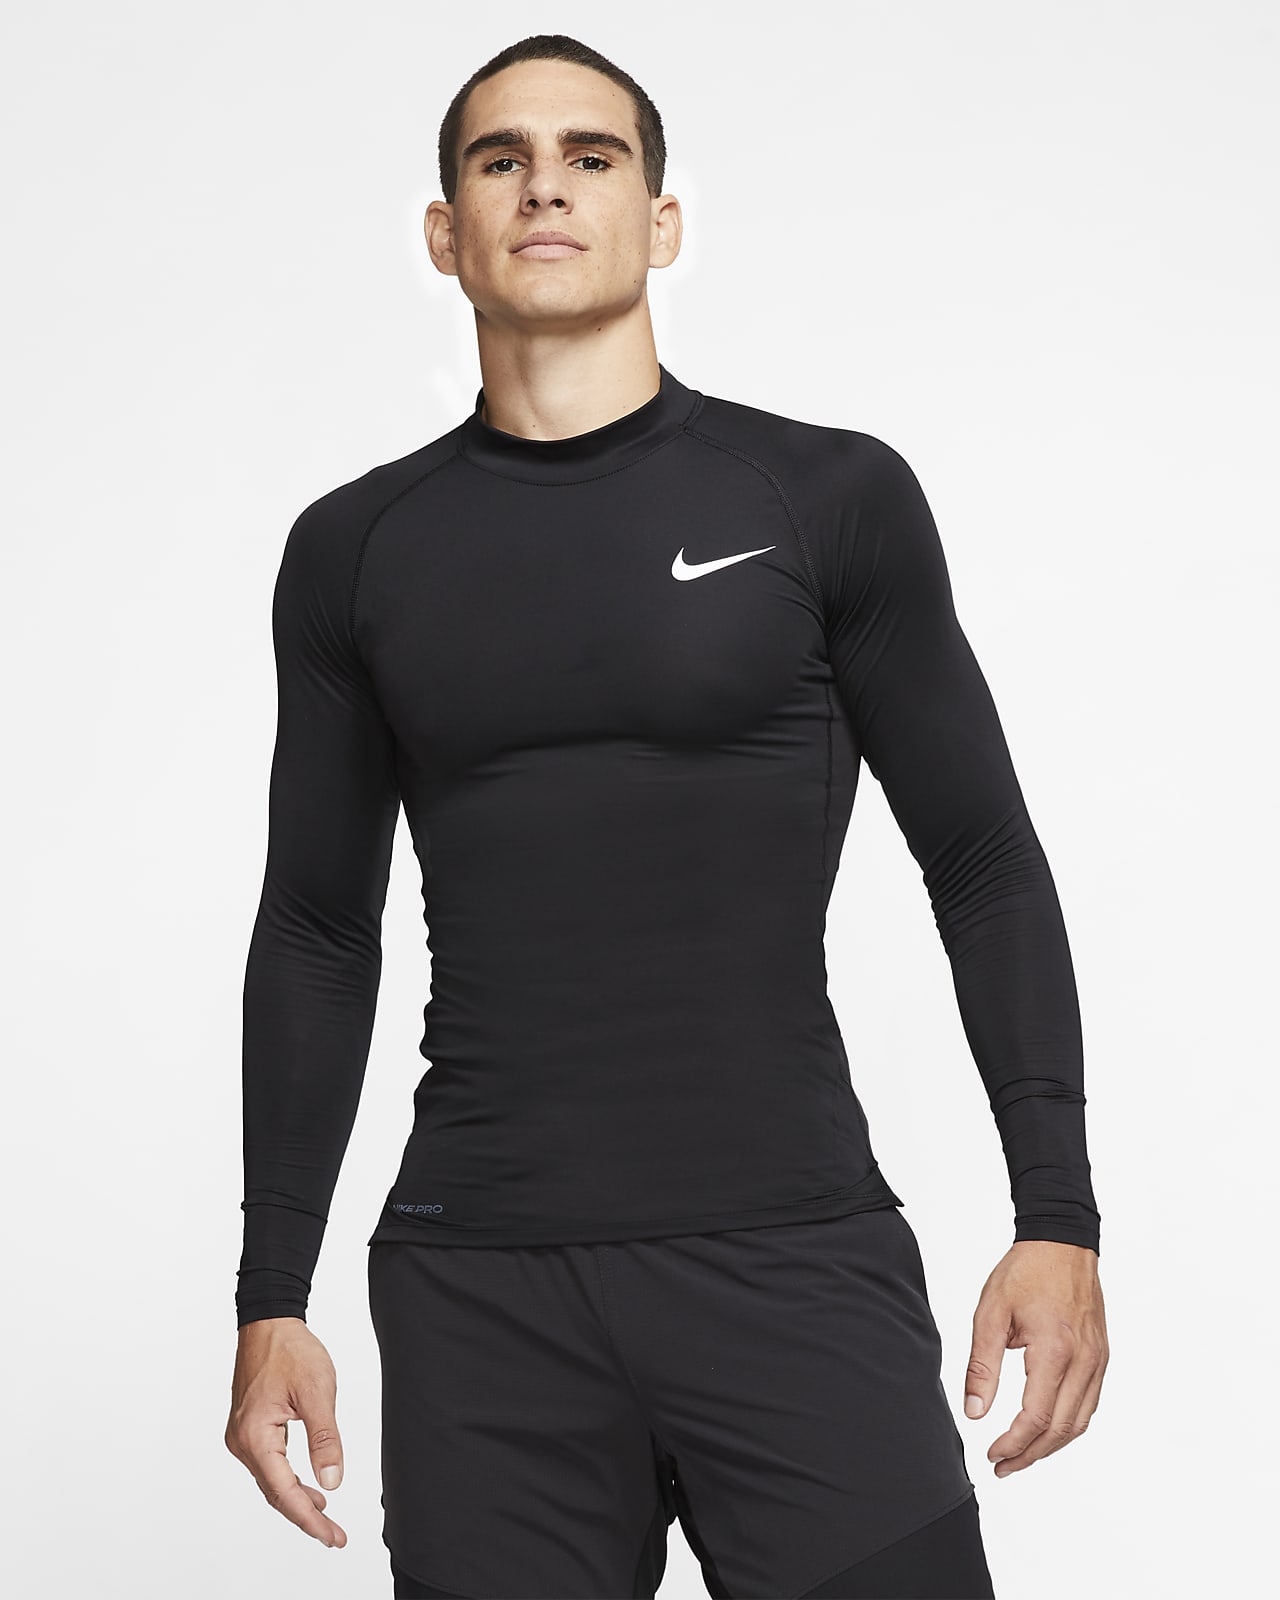 Nike Pro Men's Long-Sleeve Top. Nike LU